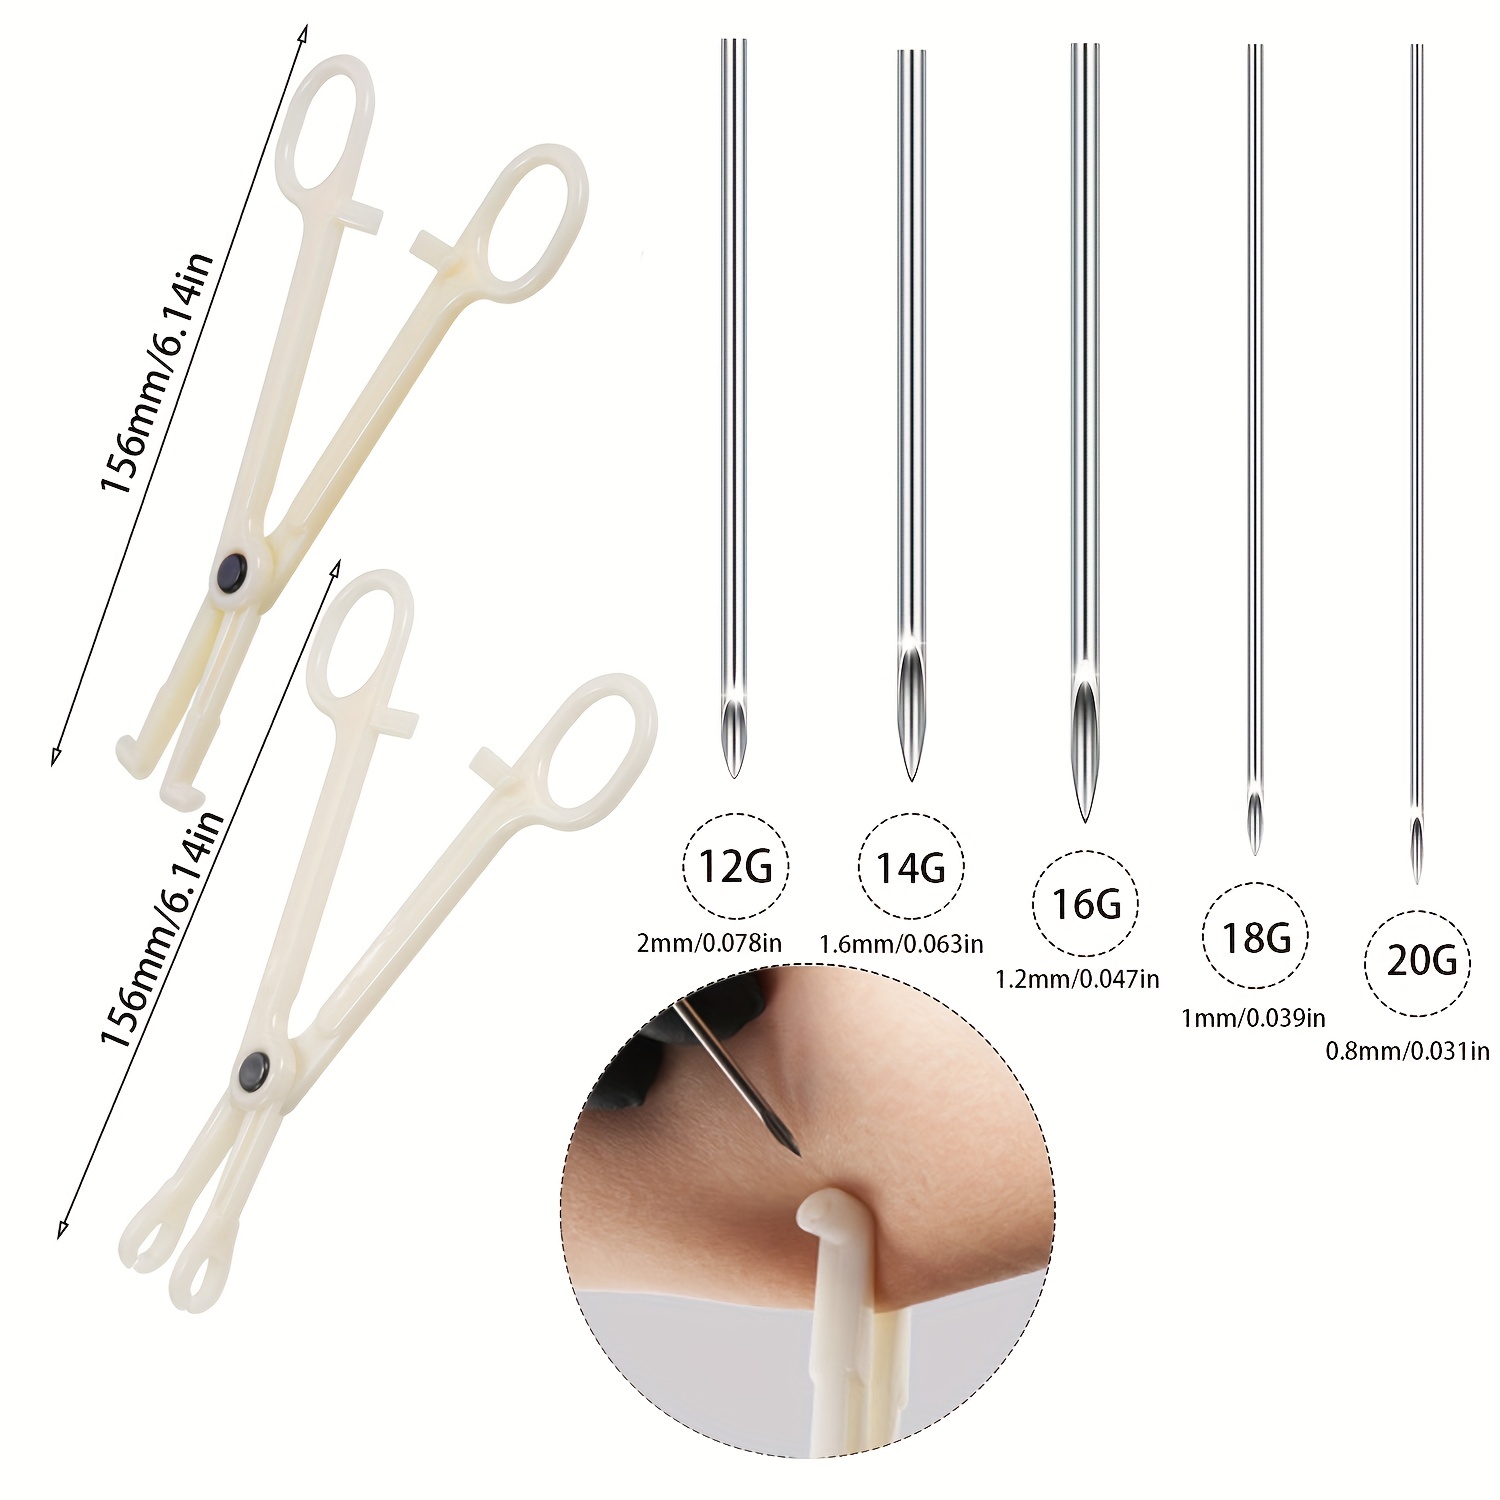 1PC Plastic Professional Body Piercing Kit Tools Forceps Pliers